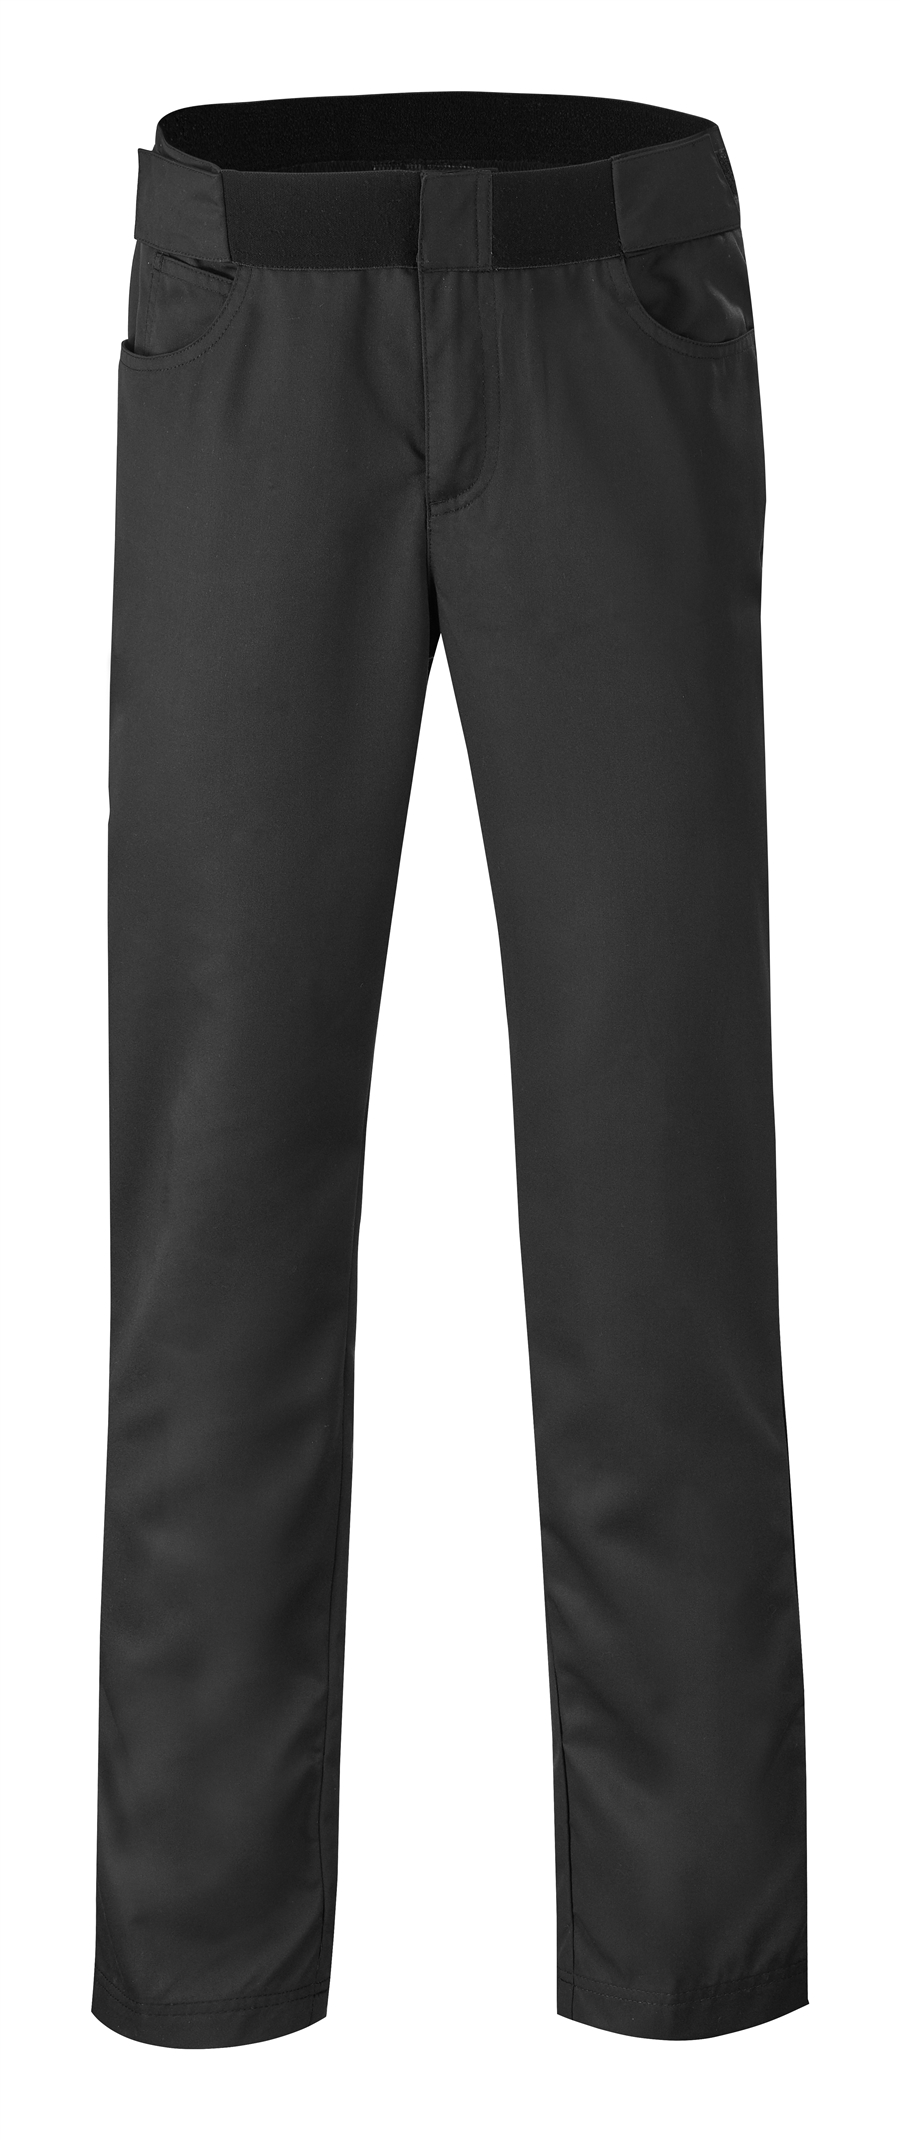 Fusion  pants black 50% Lyocell, 50% Polyester